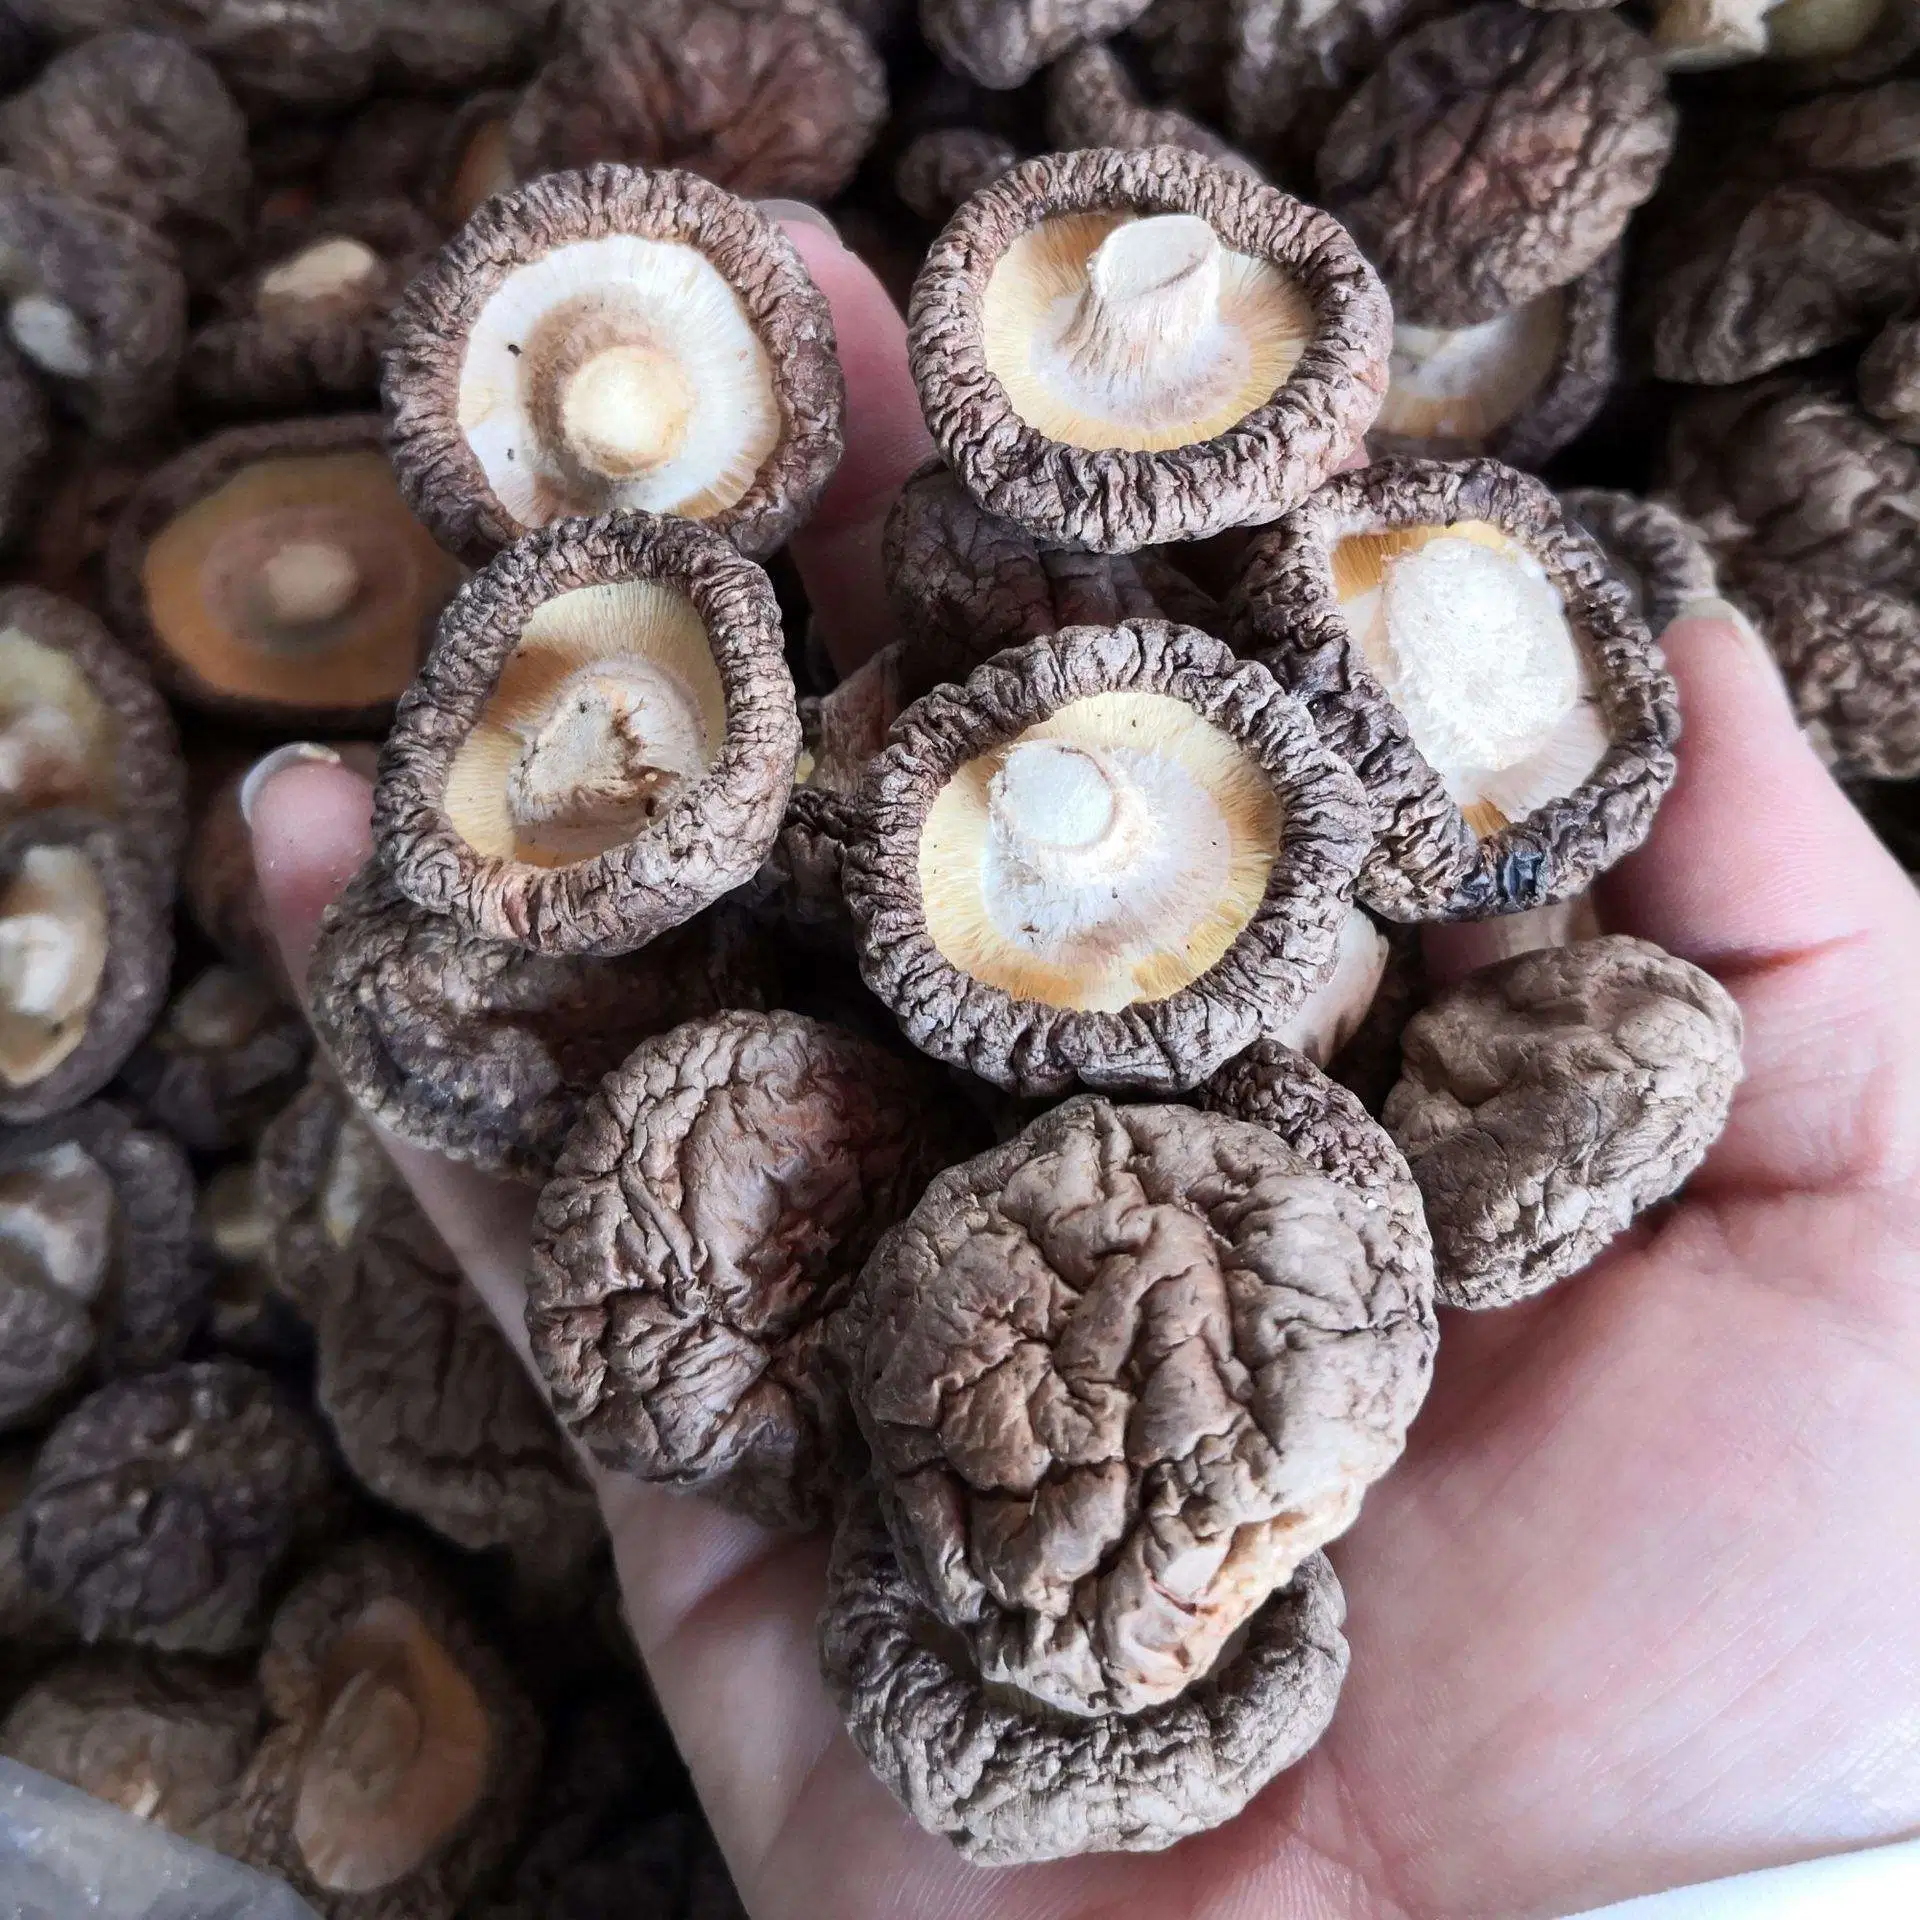 5cm Chinese Varieties Wholesale/Supplier Dried Shiitake Mushroom Price for Canned Mushroom